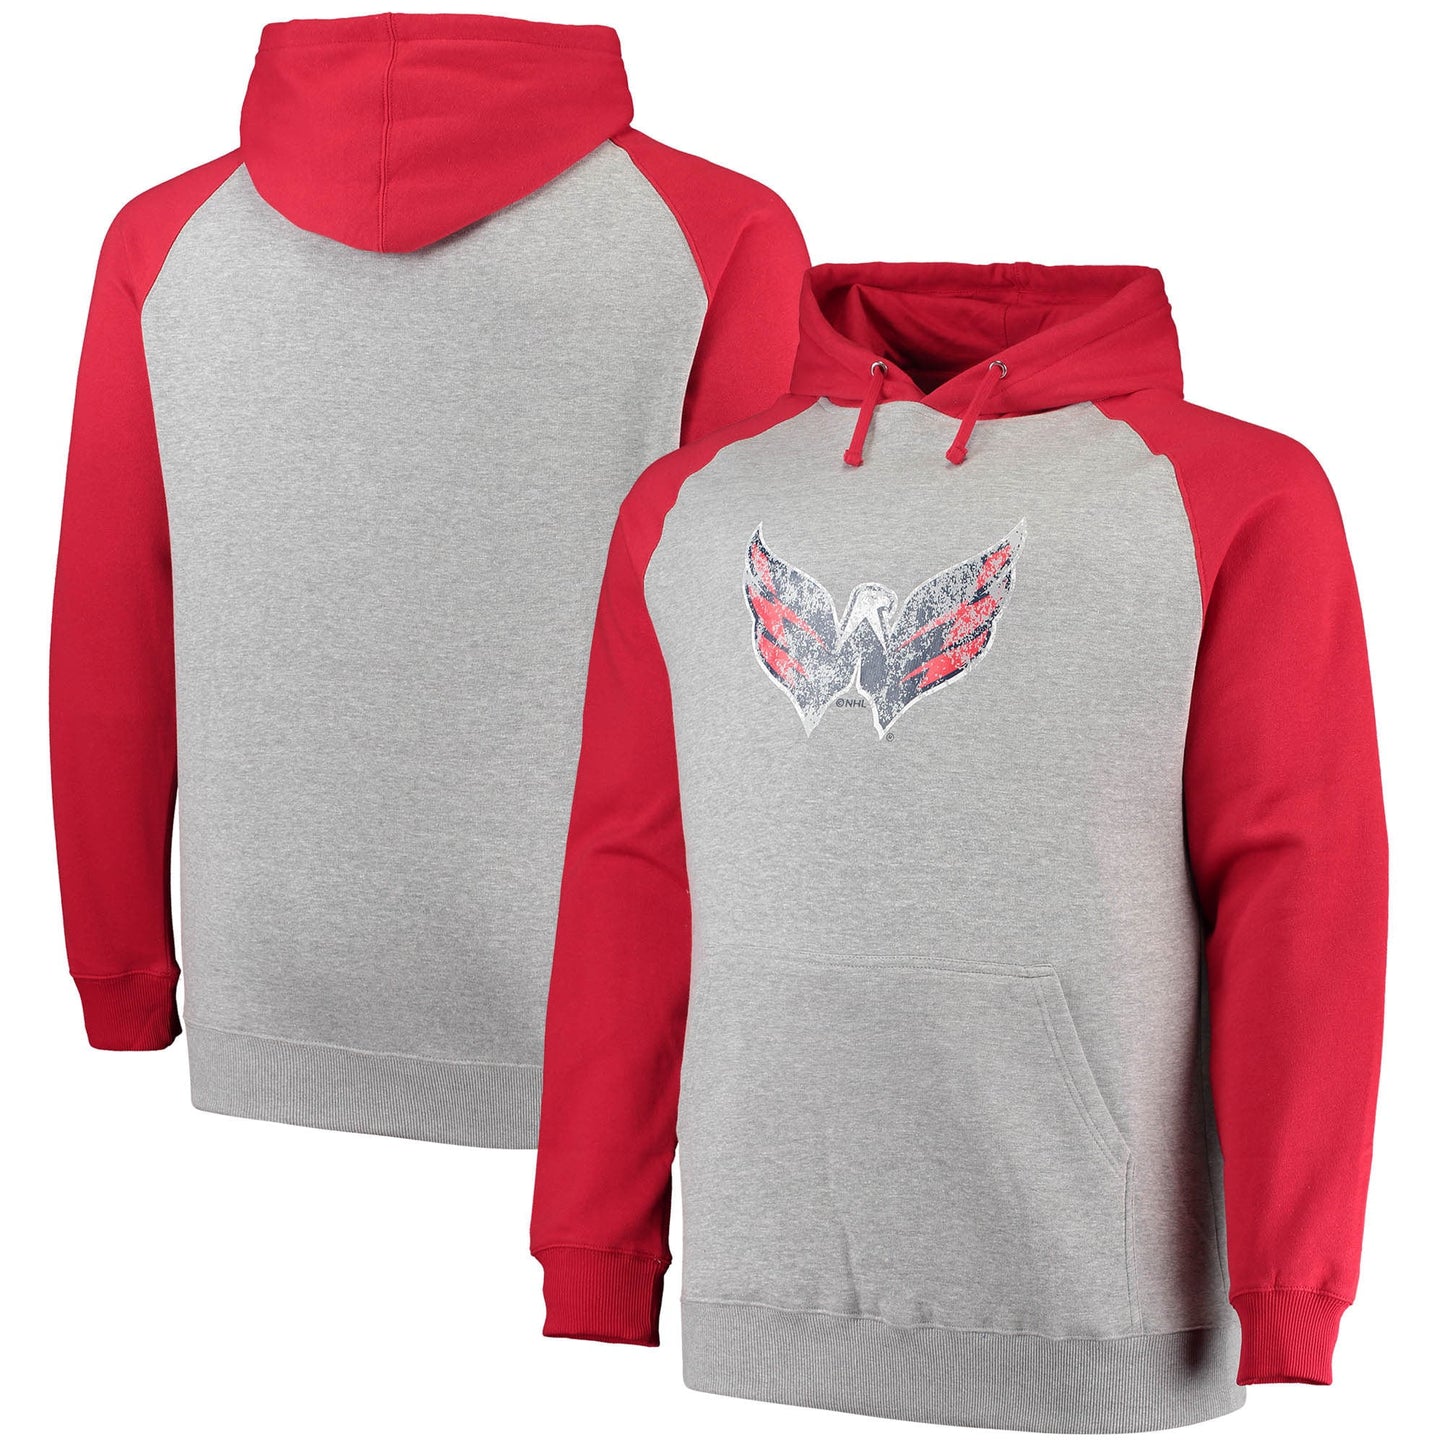 Men's Fanatics Branded Heathered Gray/Red Washington Capitals Big & Tall Raglan Pullover Hoodie